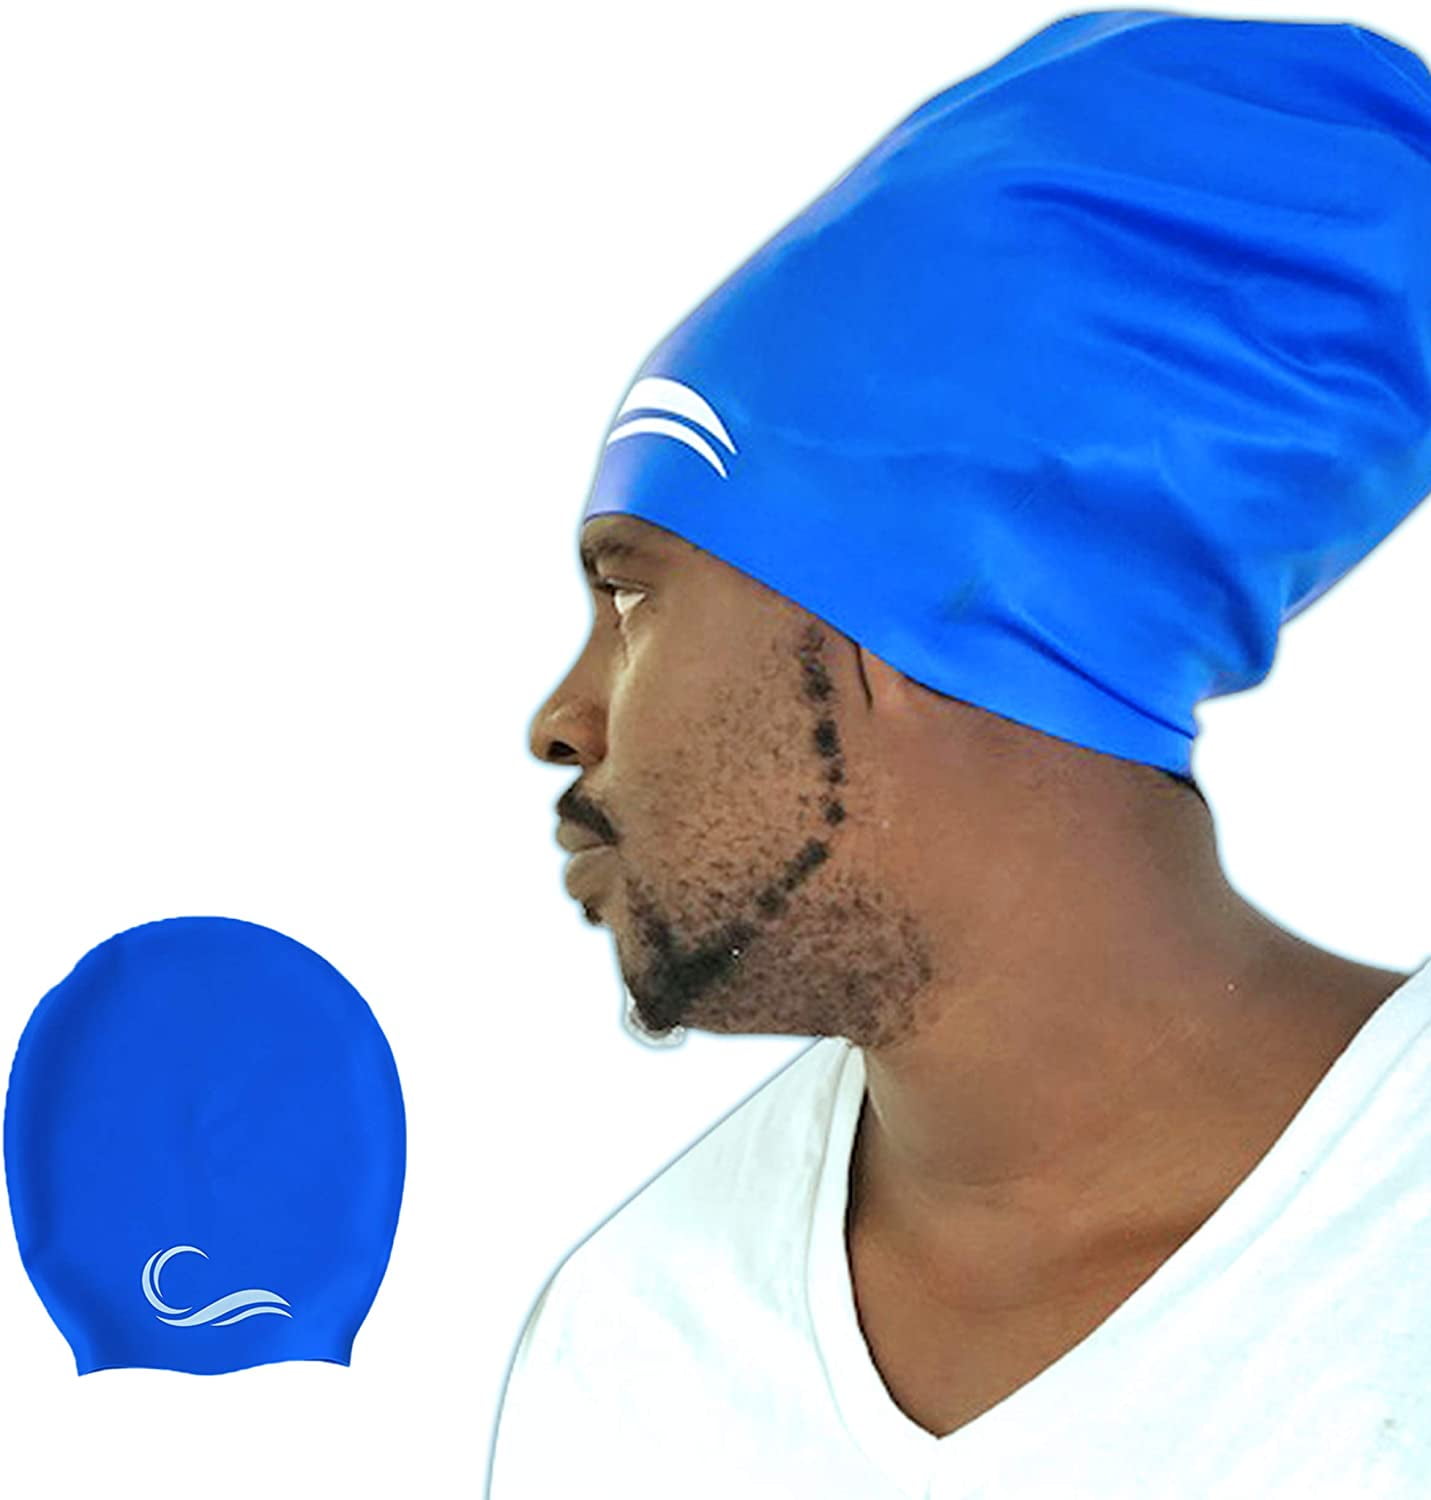 New Swimming Cap Waterproof Silicone Swim Pool Hat for Adult Men Long Hair Women 